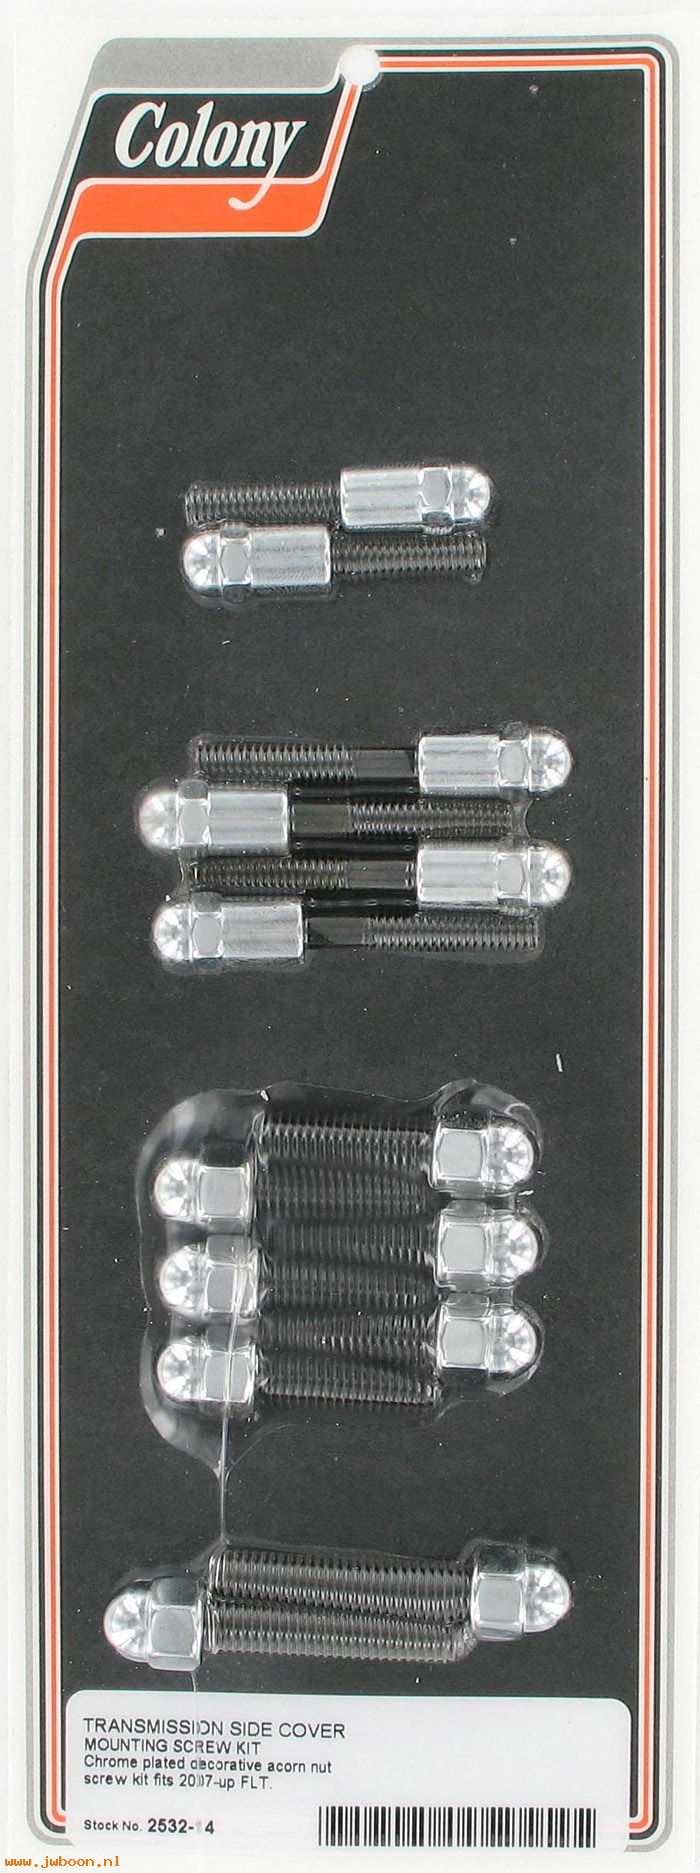 C 2532-14 (): Transmission side cover mounting kit - acorn, in stock - FLT '07-